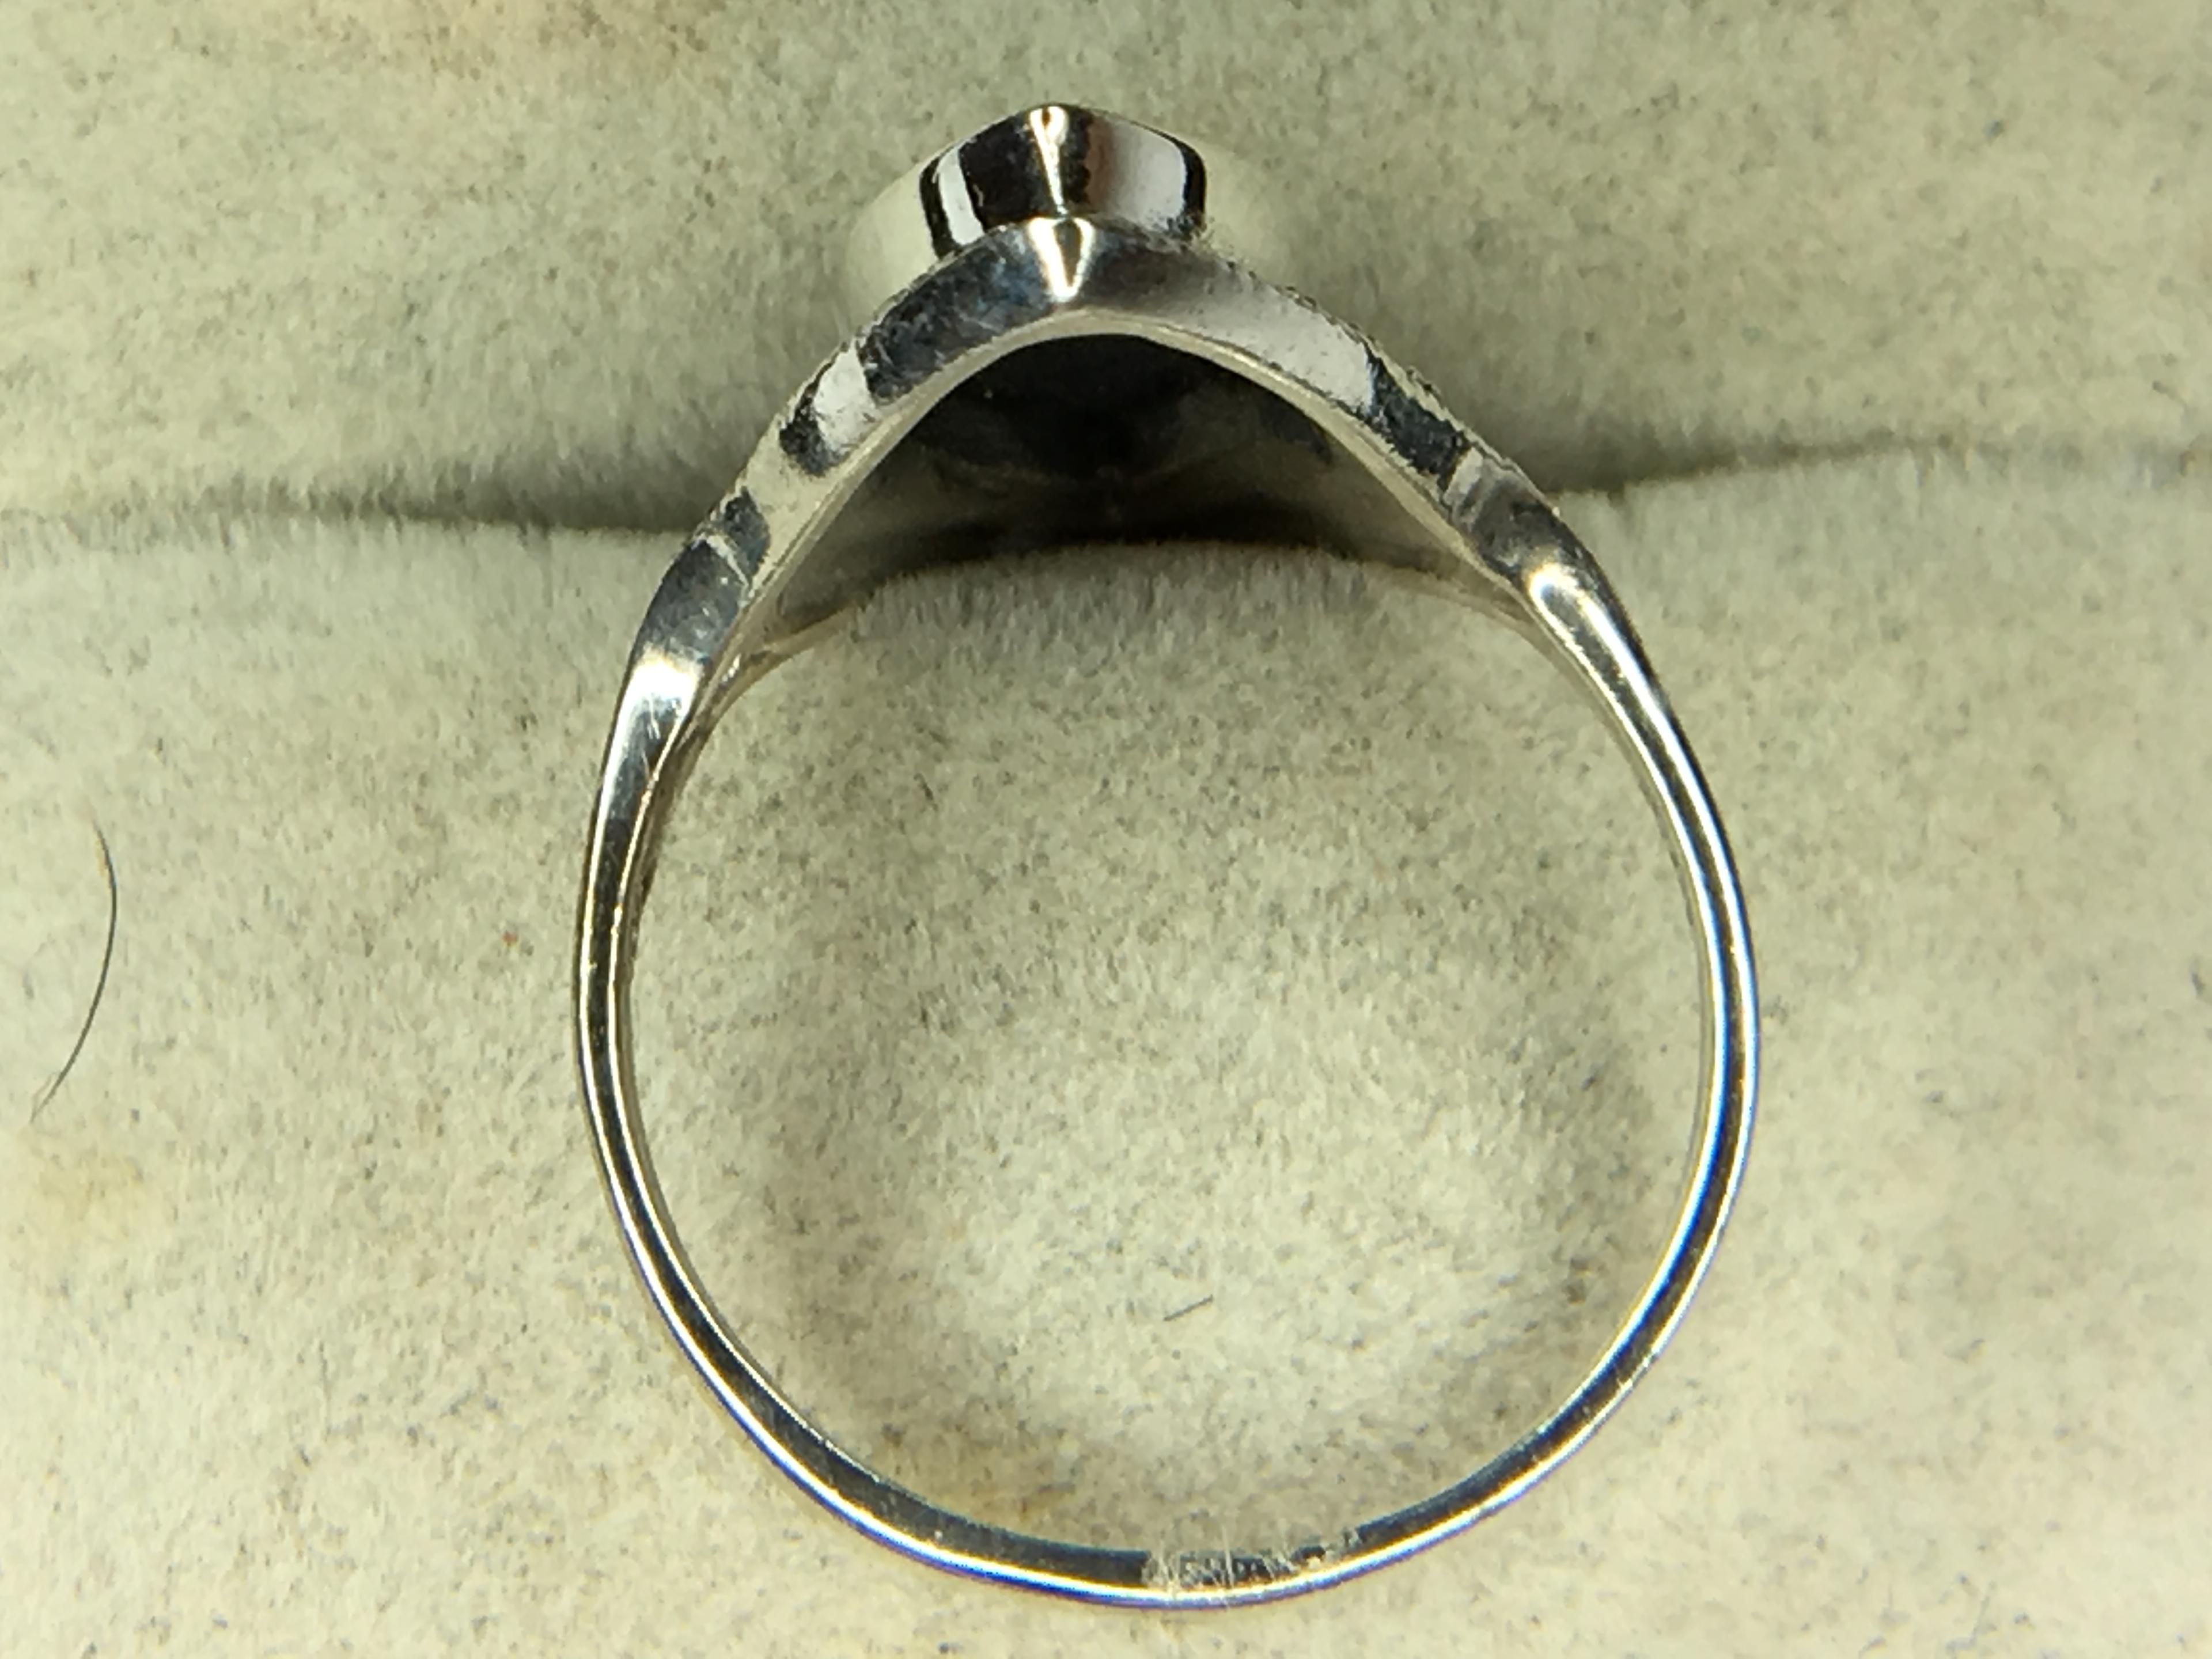 .925 Sterling Silver Ladies Black Onyx Ring